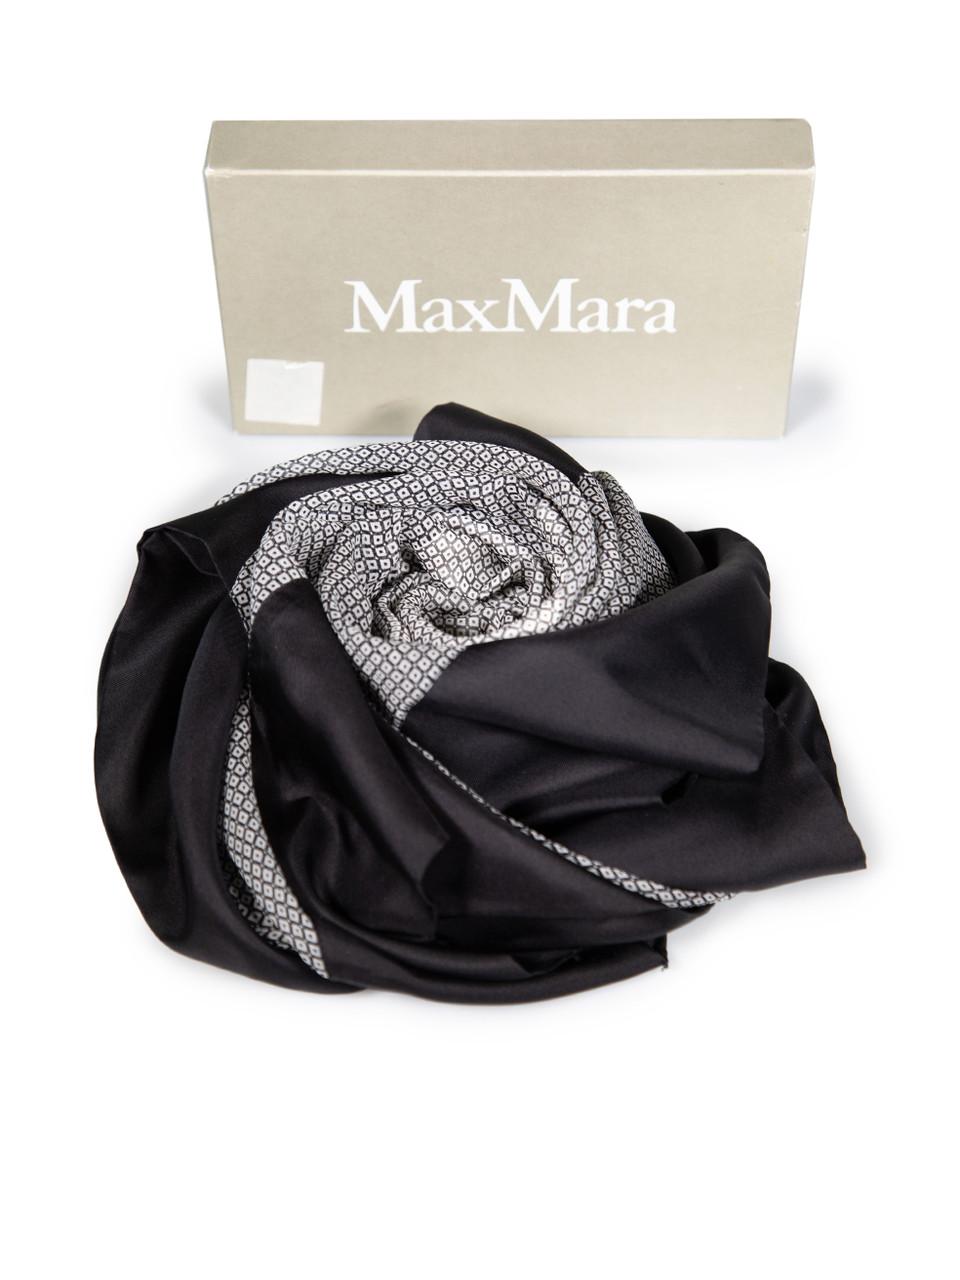 Max Mara Black Square Pattern Scarf For Sale 3